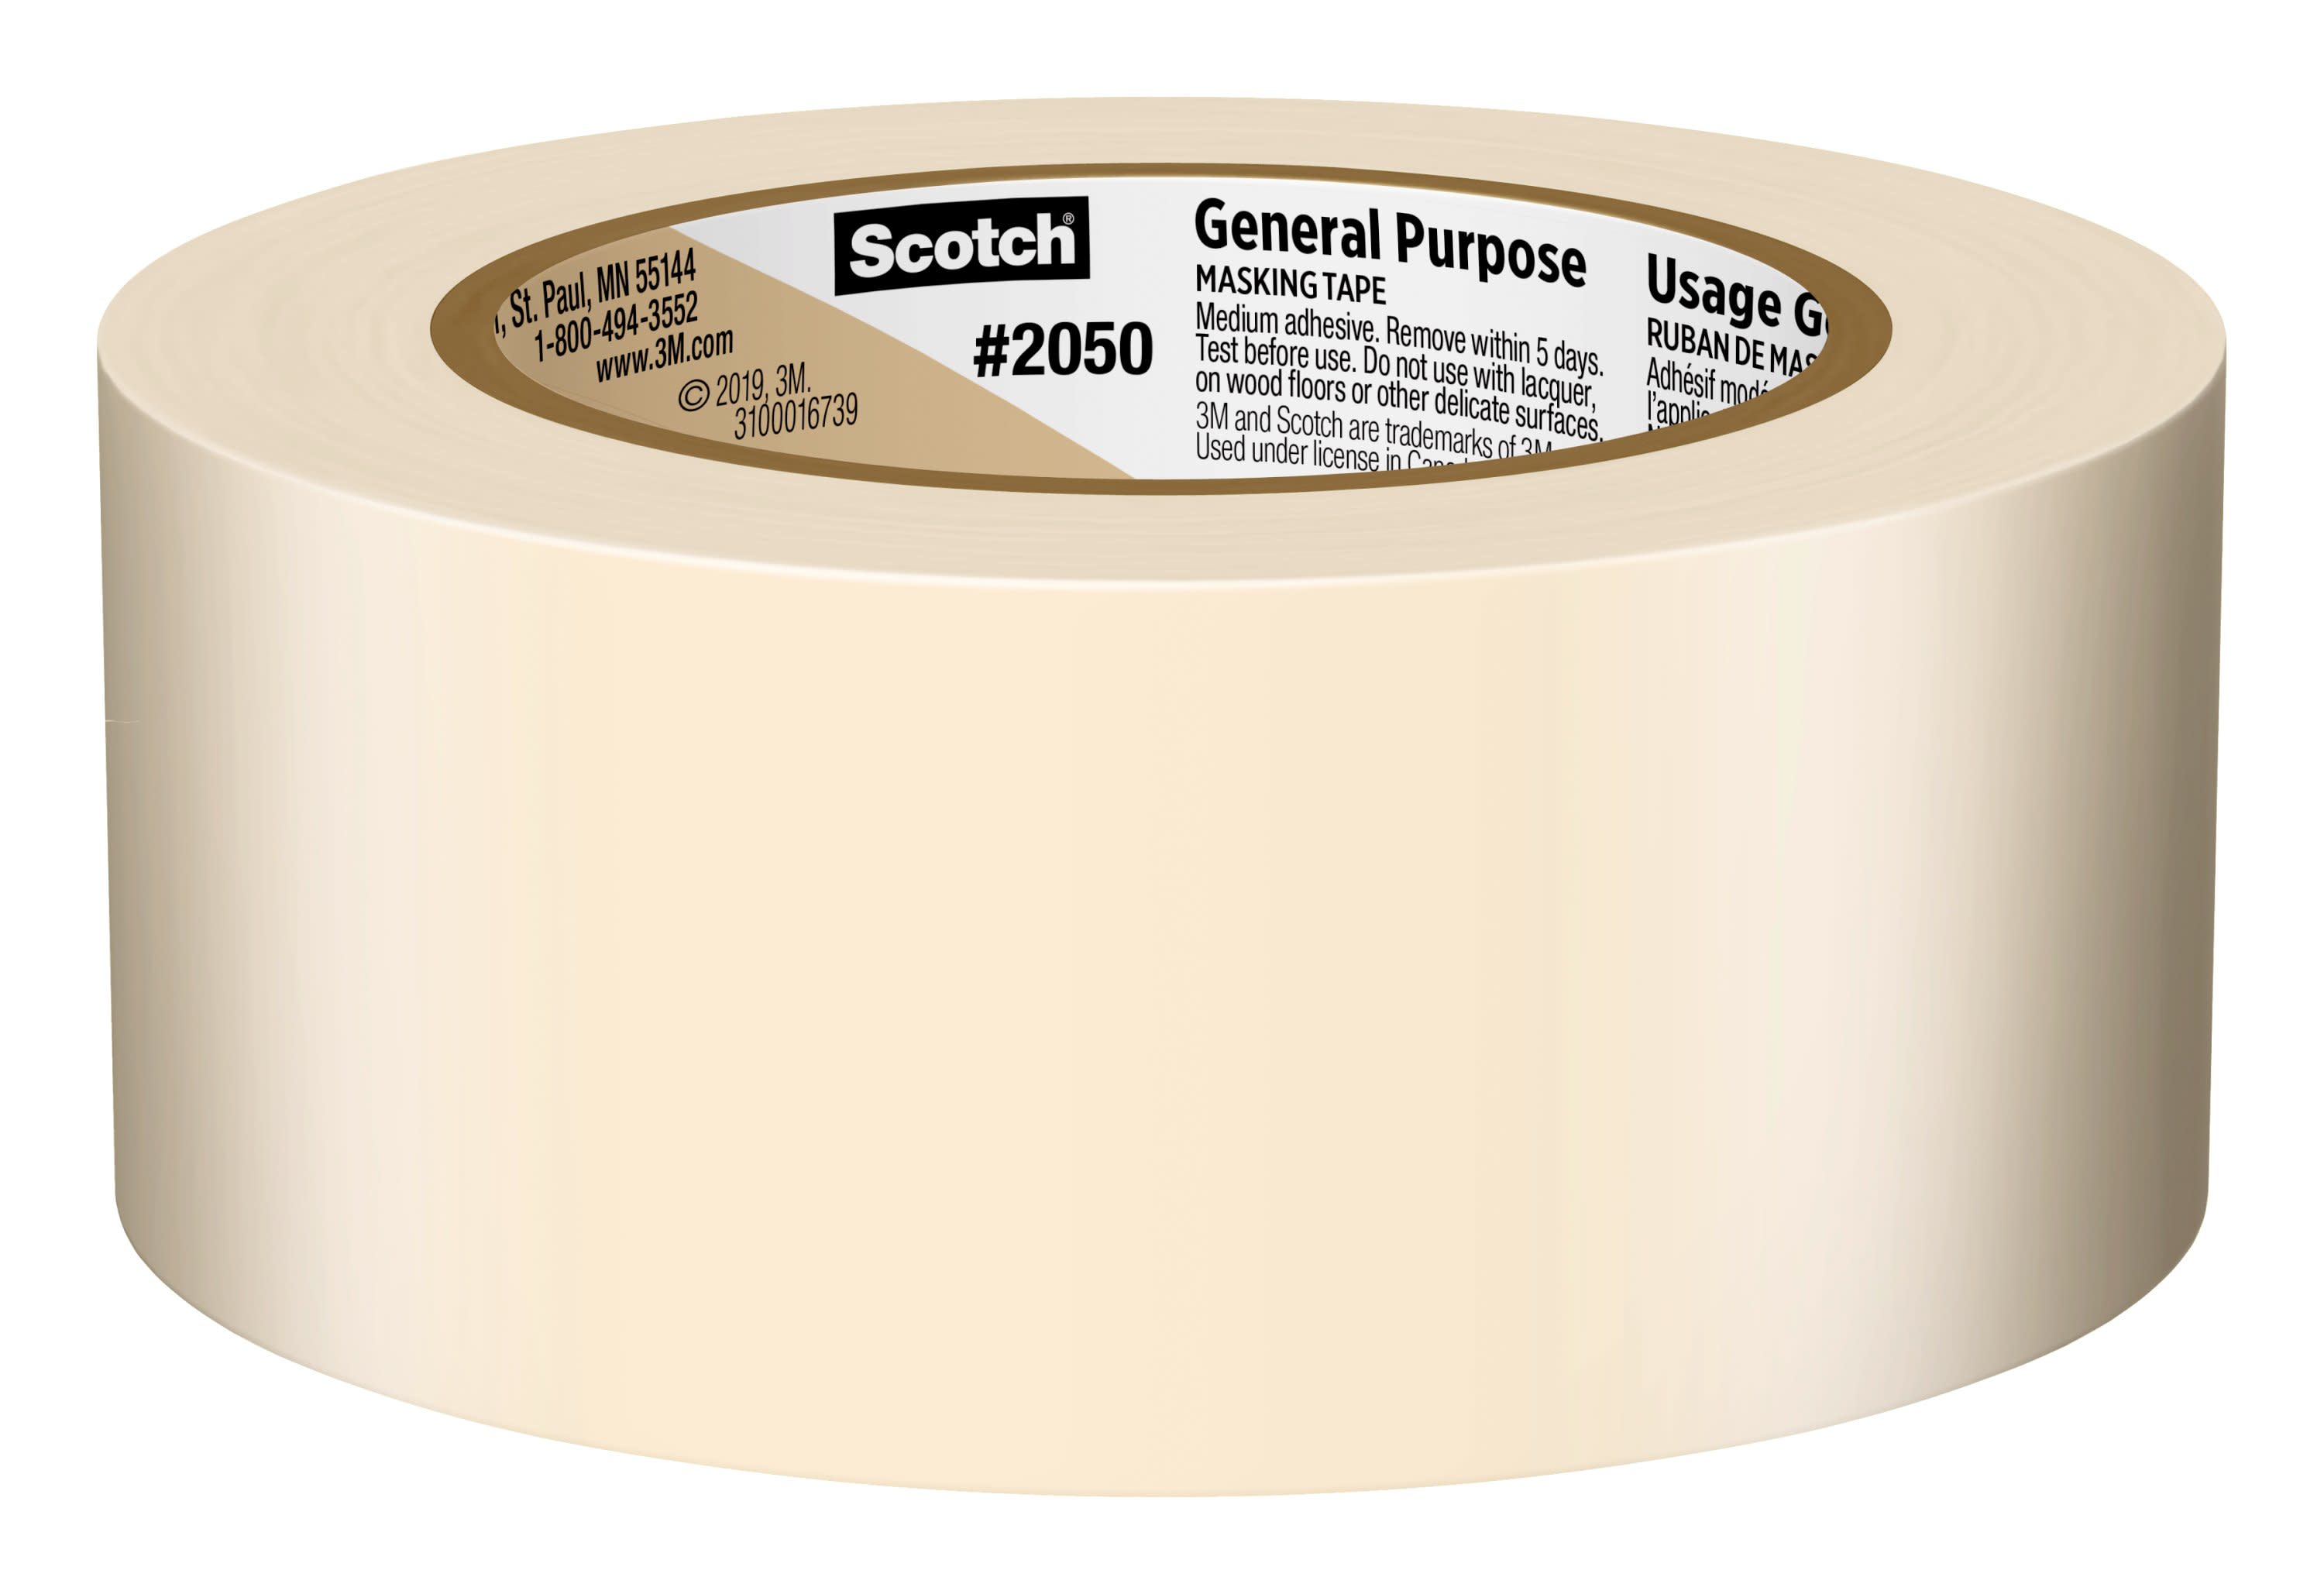 Scotch General Purpose Masking Tape, Tan, 1.88 inches x 60 yards